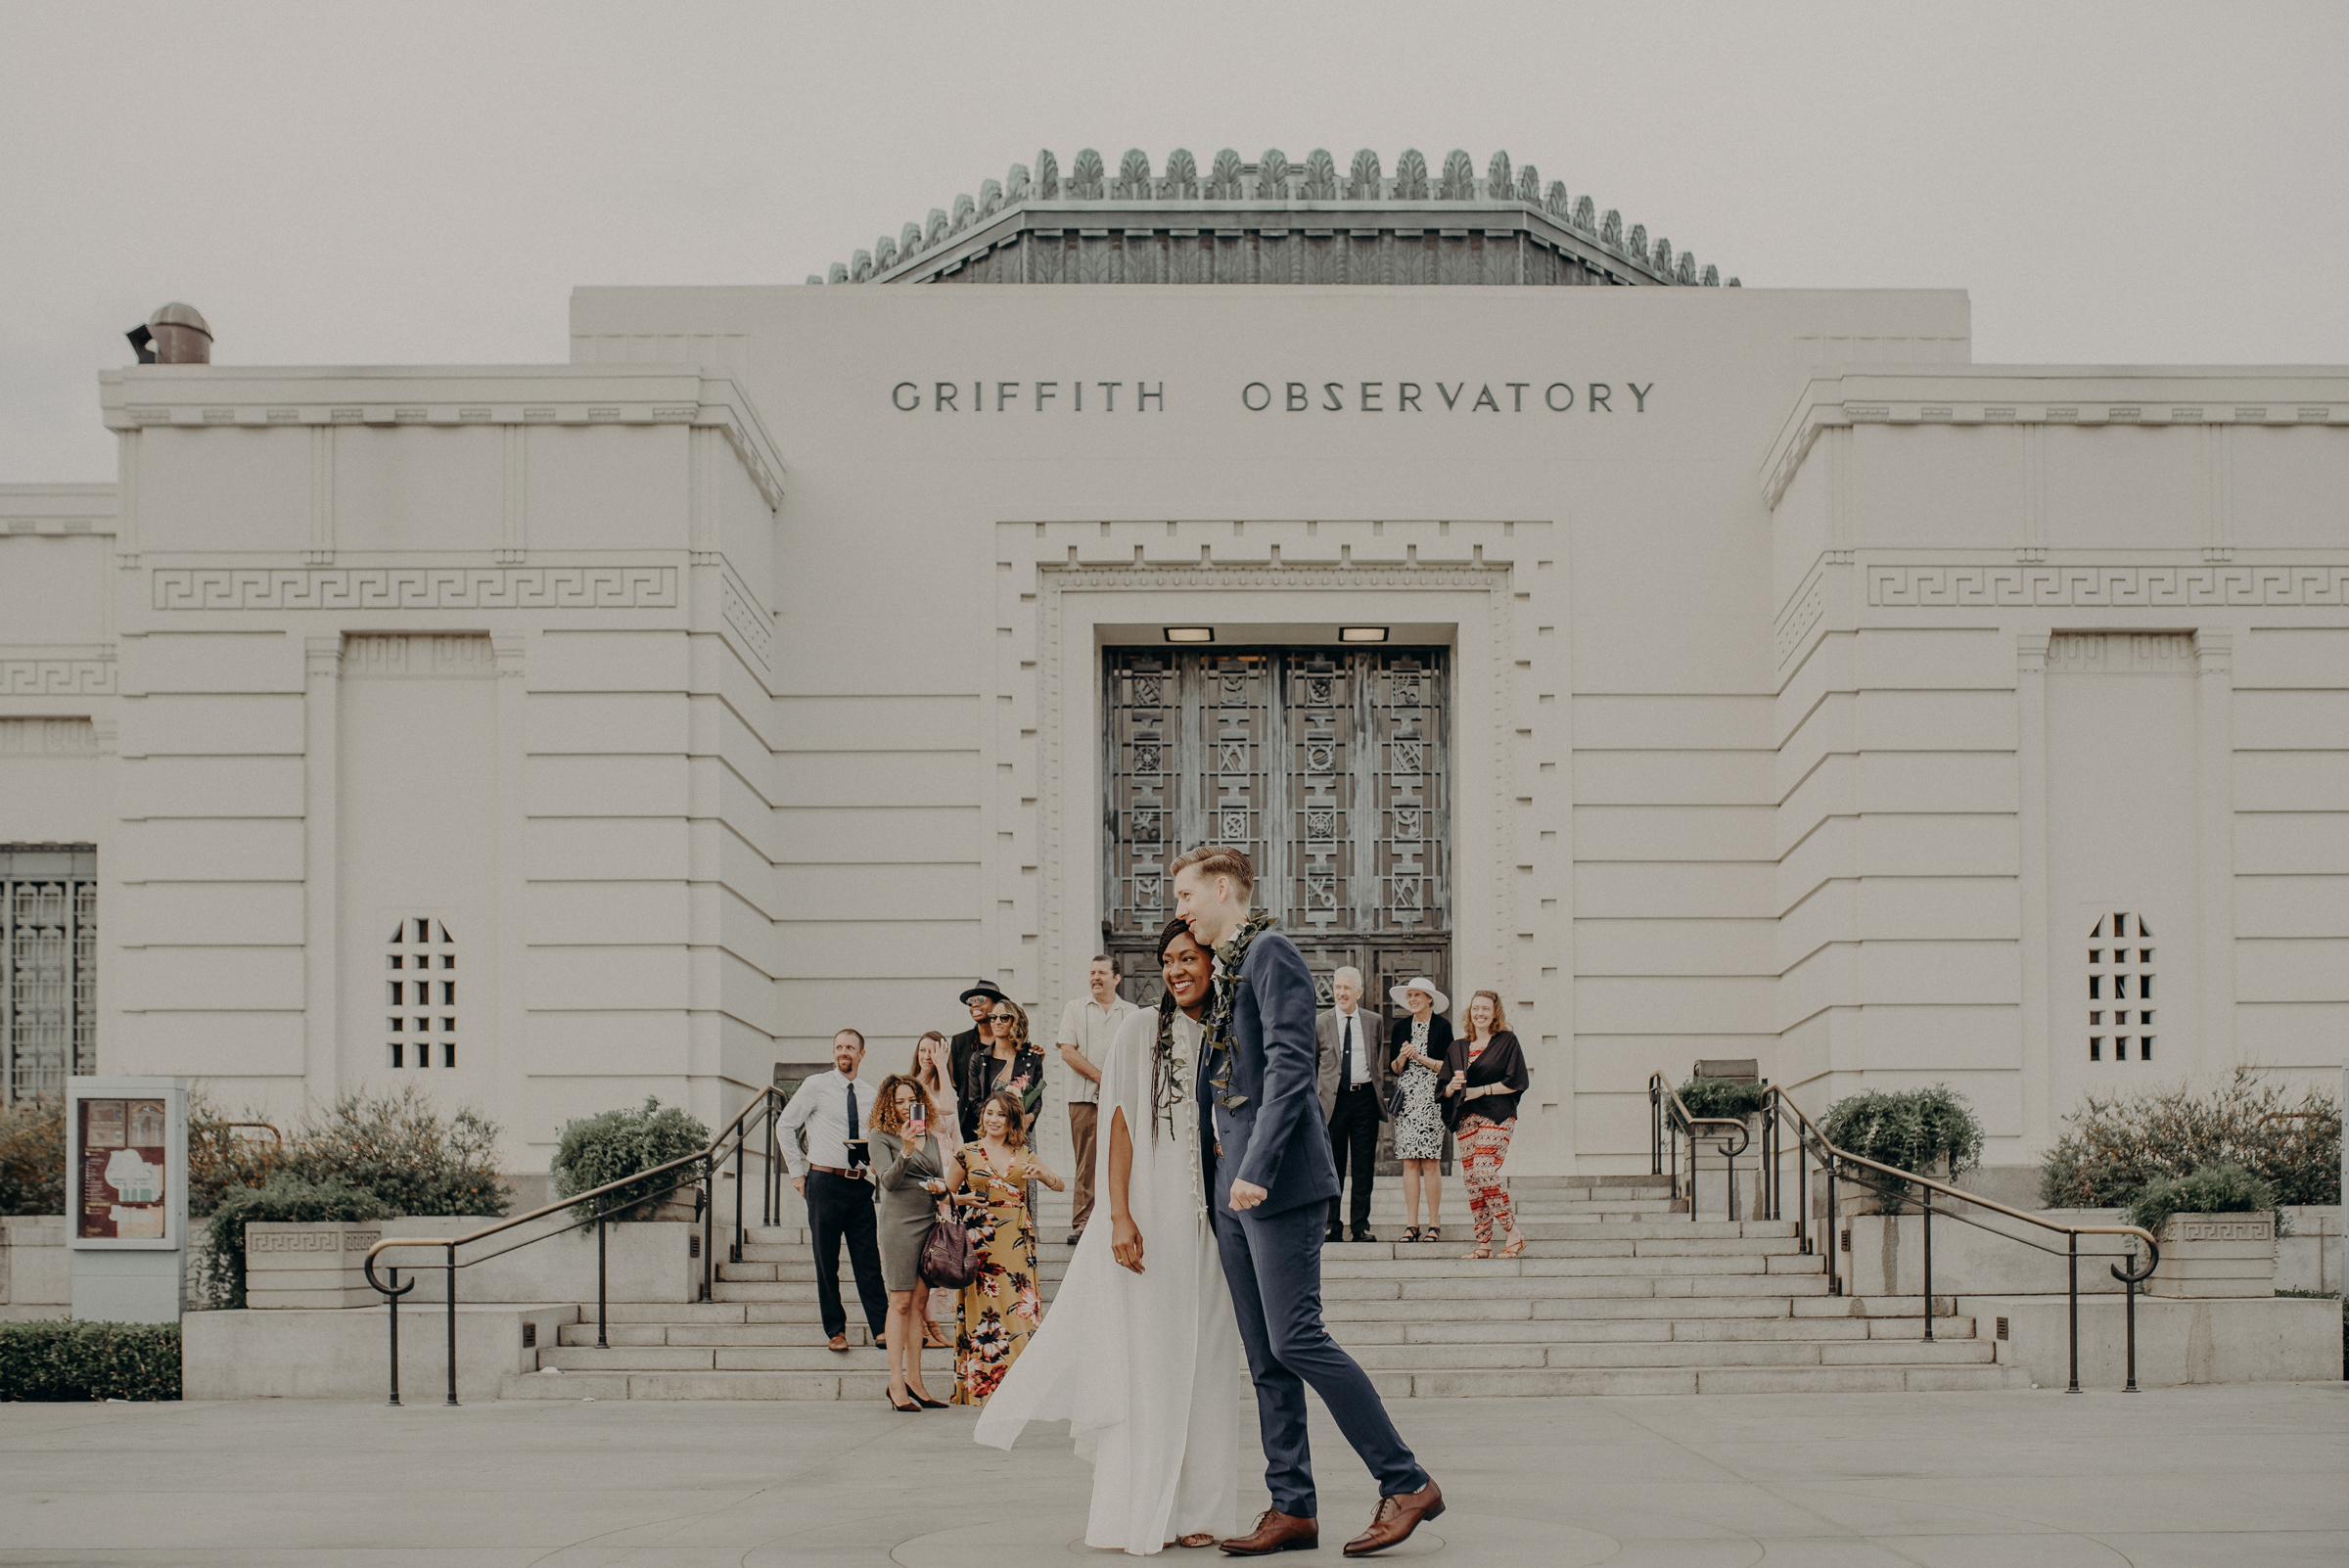 Los Angeles Wedding Photographer - Griffith Observatory Elopement - Long Beach wedding photo - IsaiahAndTaylor.com-037.jpg